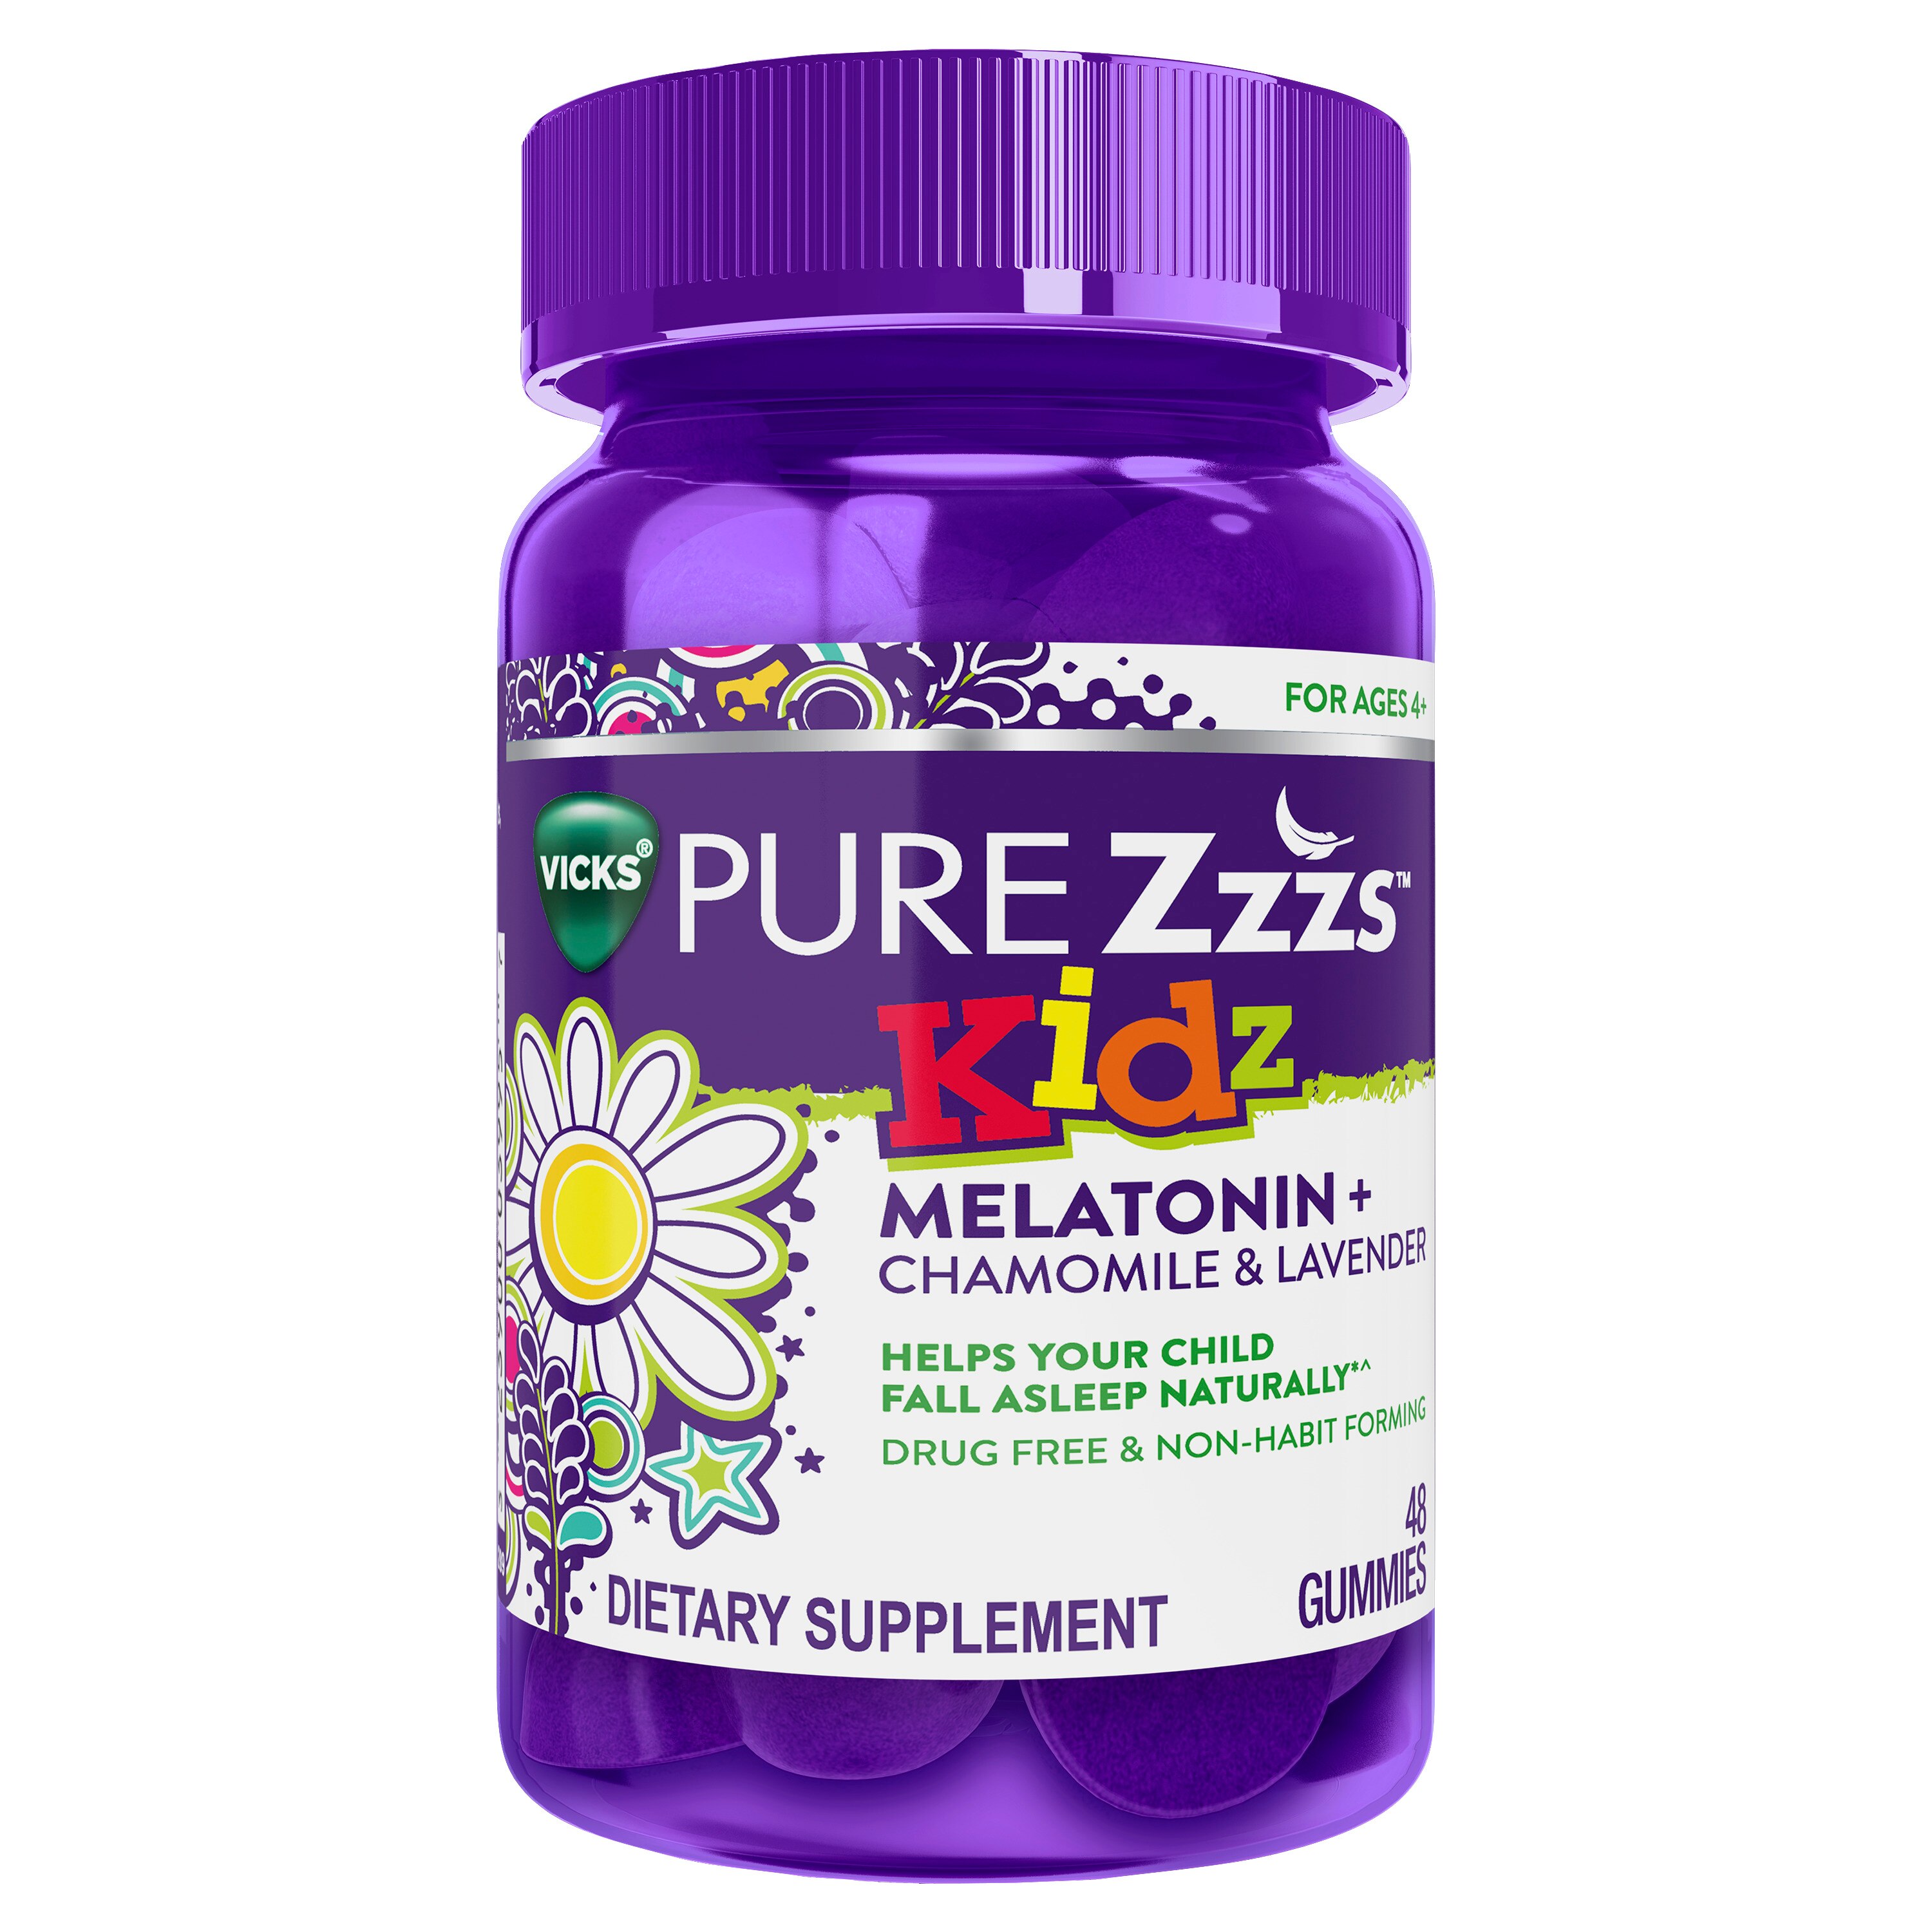 Vicks Pure Zzzs Kidz Melatonin + Chamomile & Lavender Sleep Aid Gummies